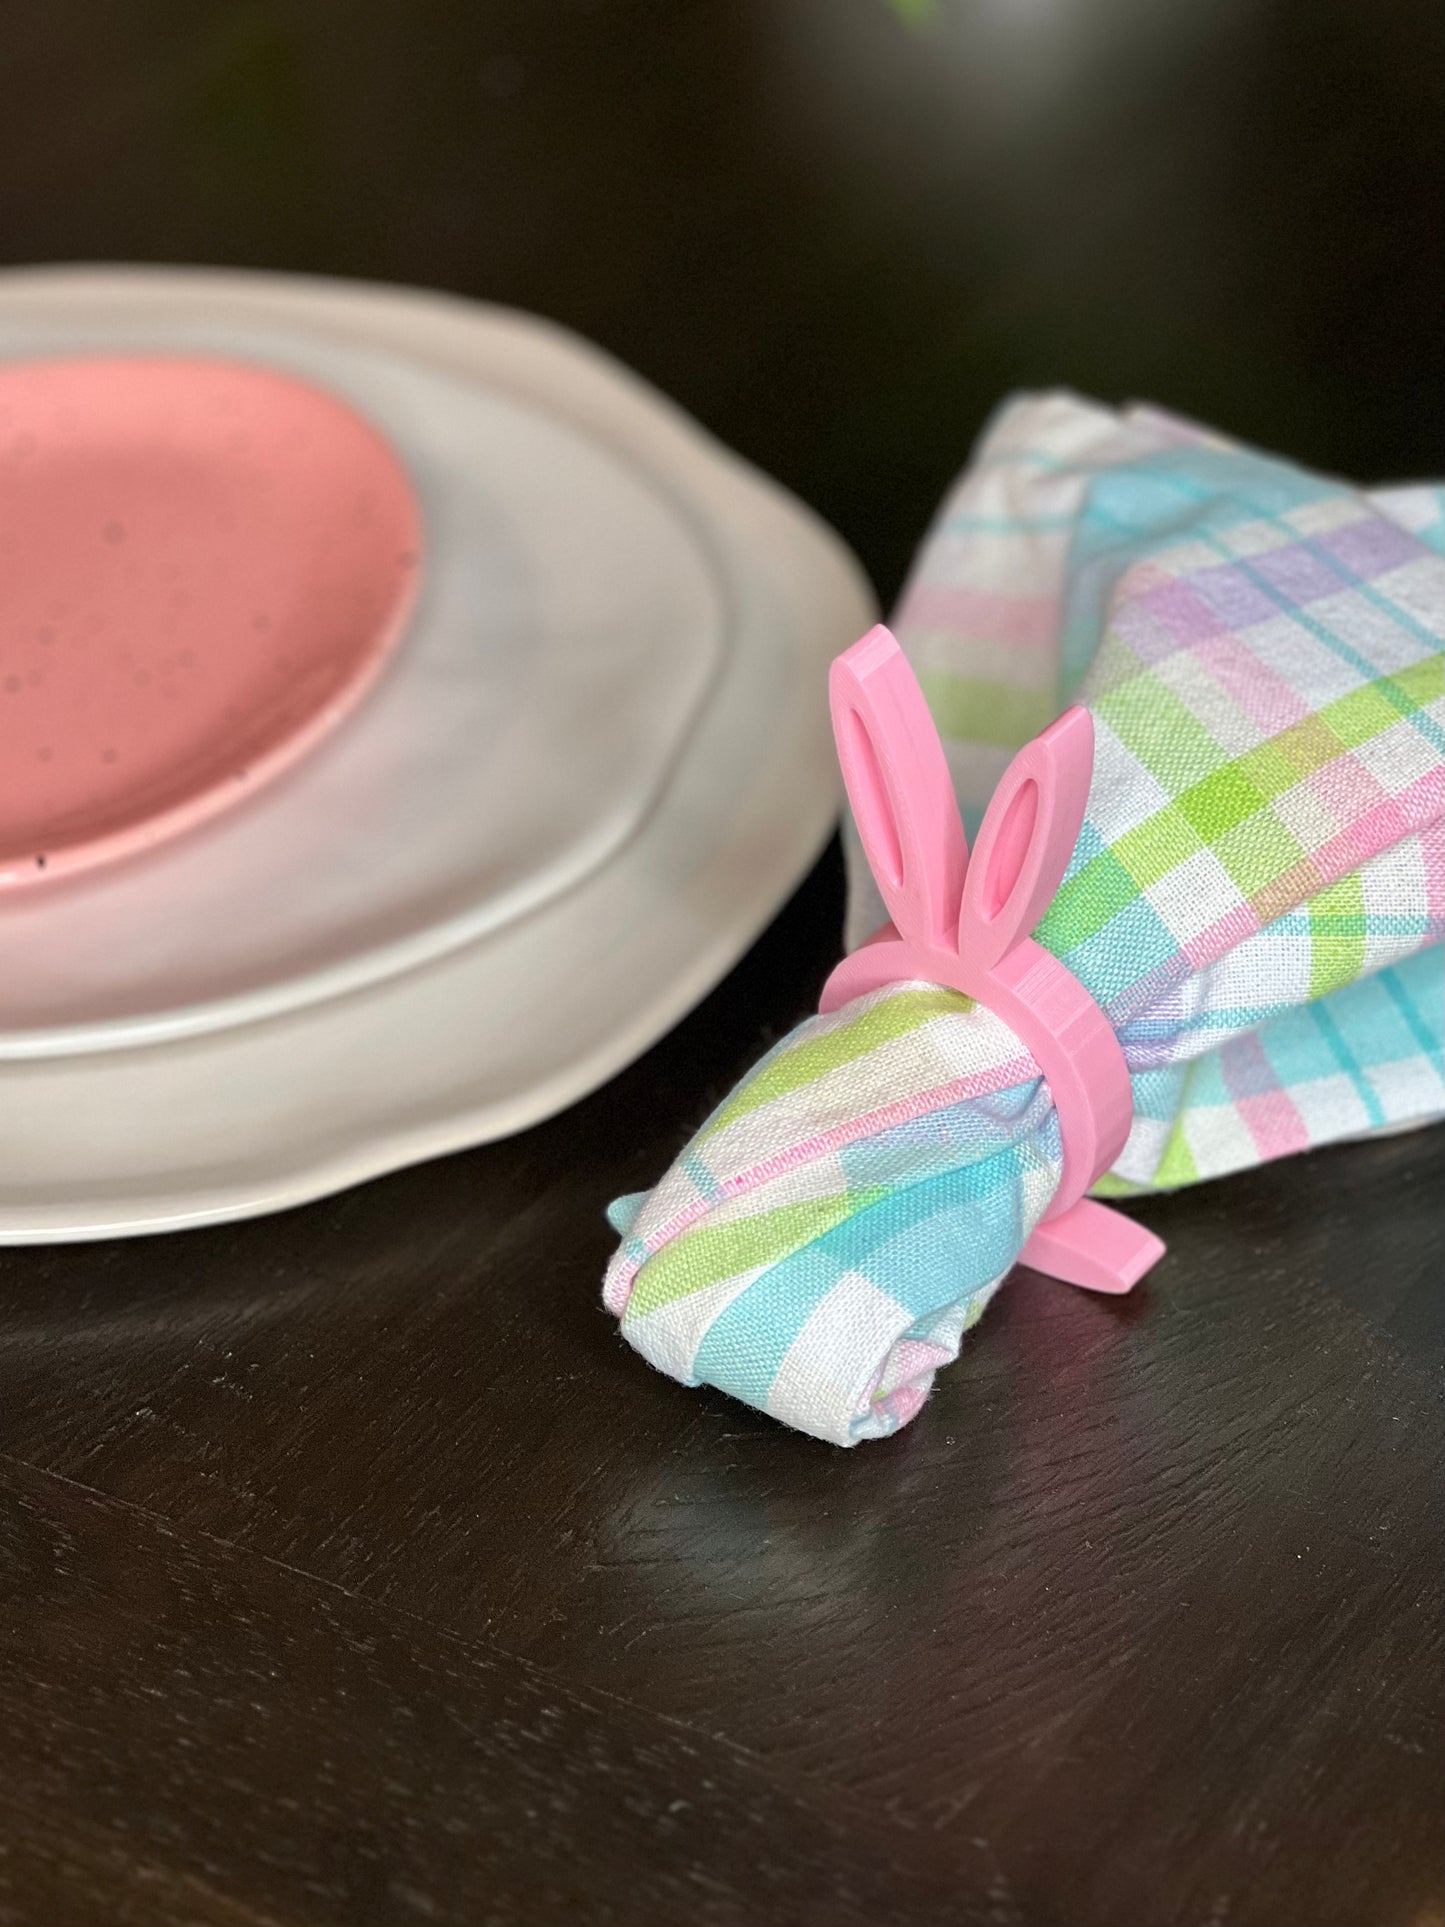 Spring Bunny Rabbit Dining Napkin Ring - Easter Holiday Decor